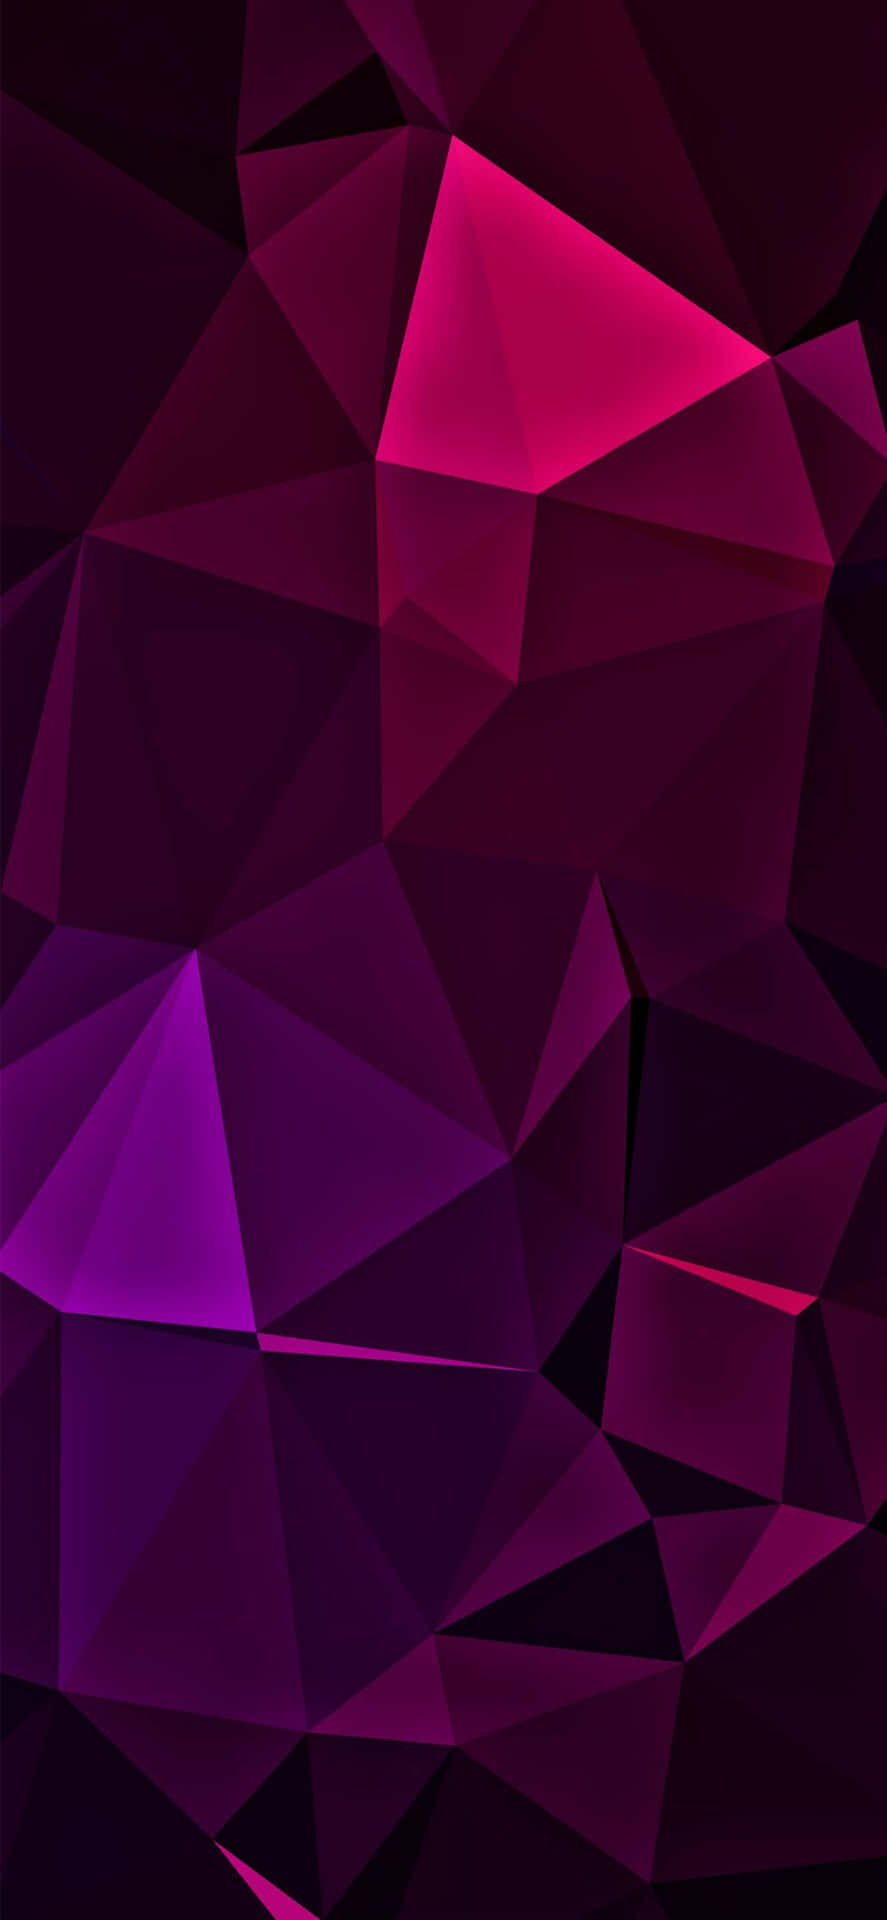 Purple And Black Polygonal Background Wallpaper